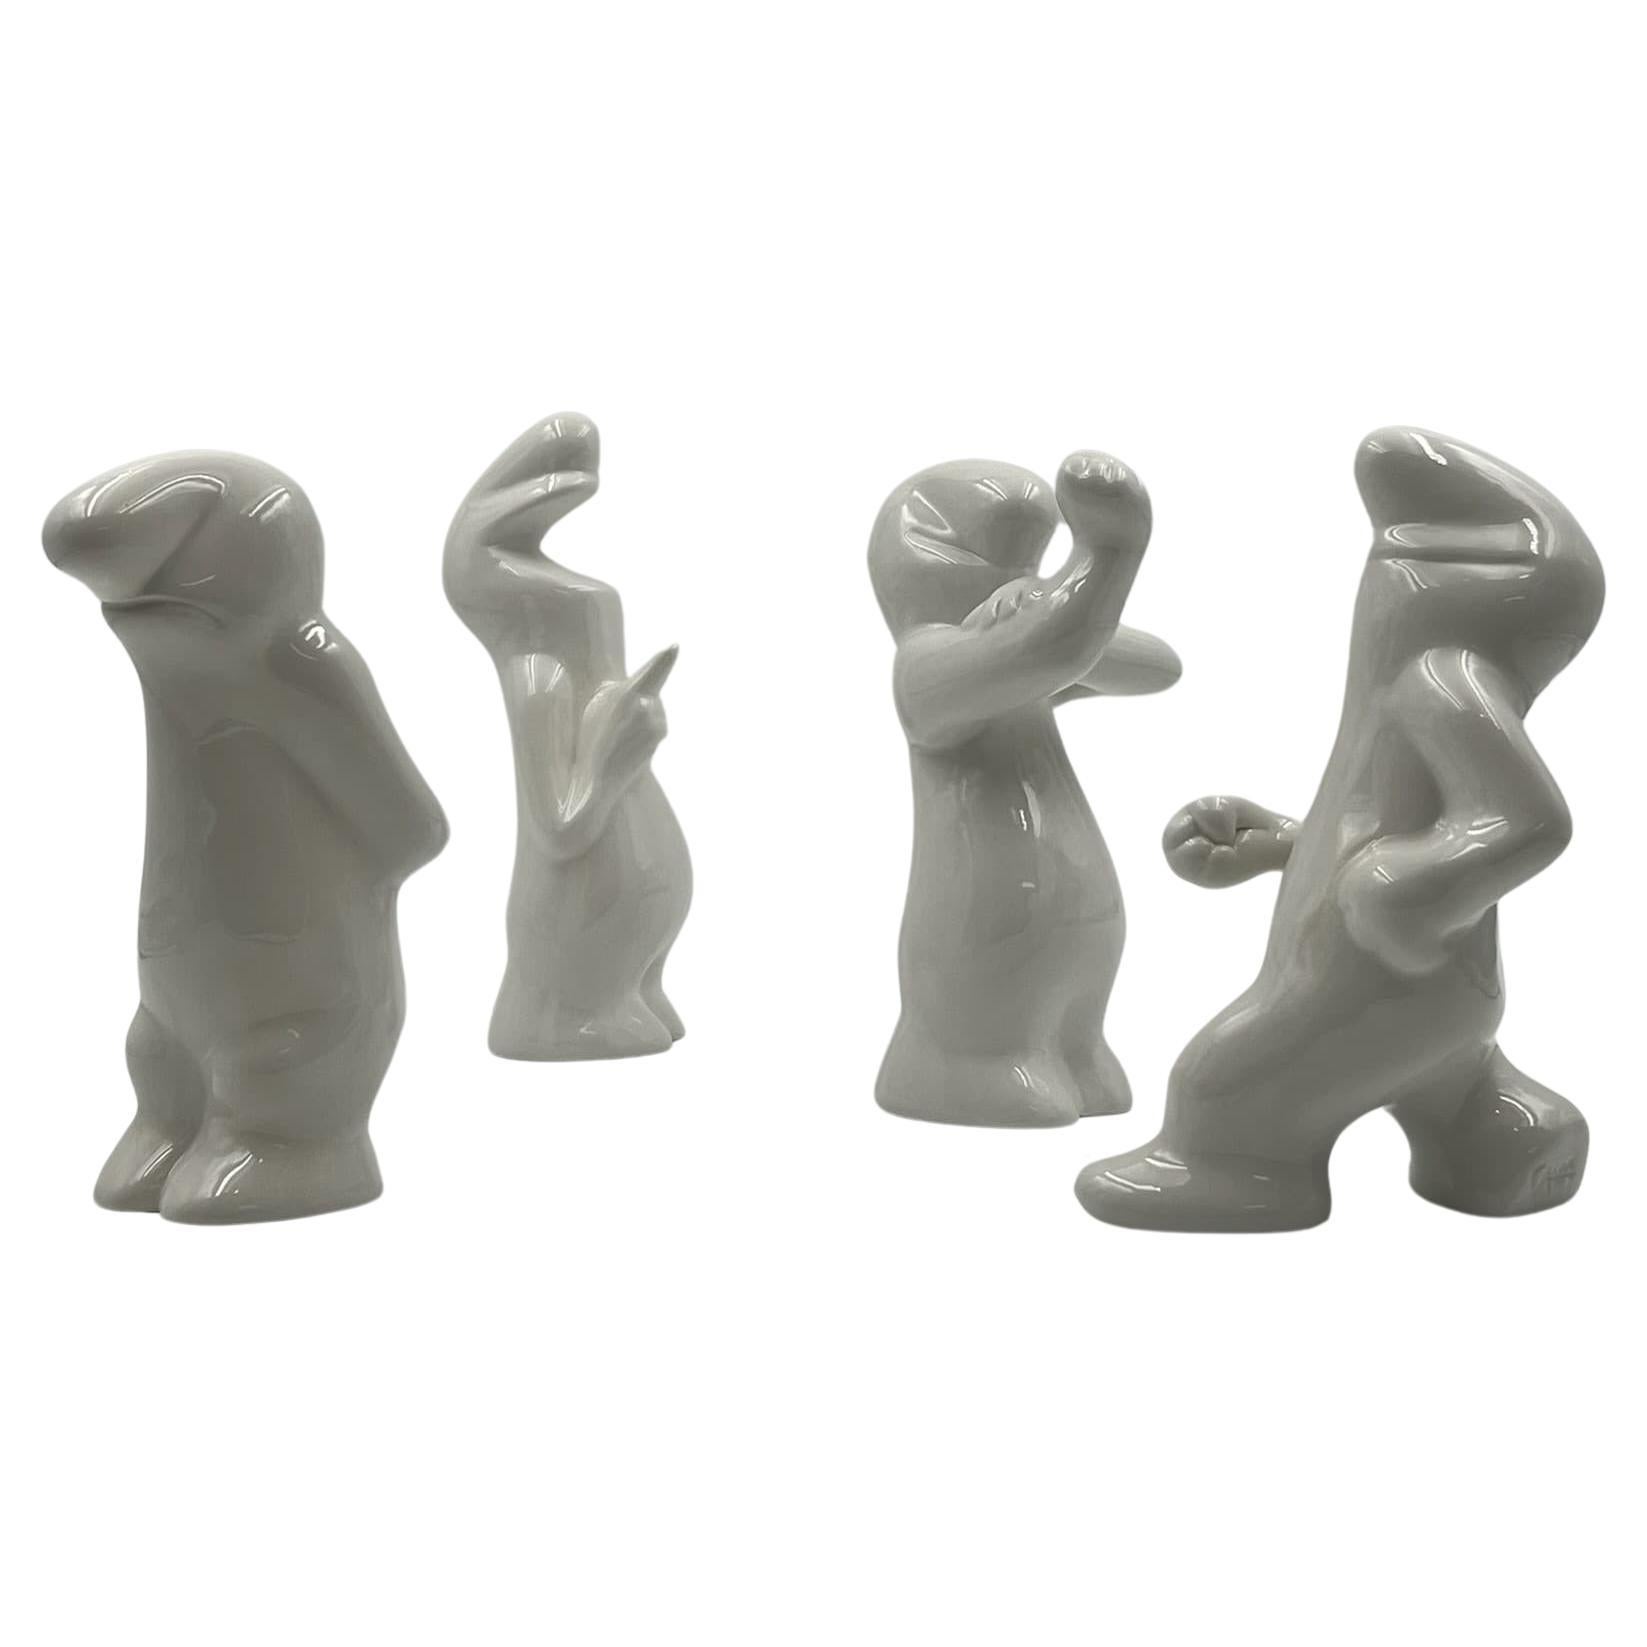 Osvaldo Cavandoli 'La Linea' - Pop Art 1960s - Set of Four Ceramic Figurines